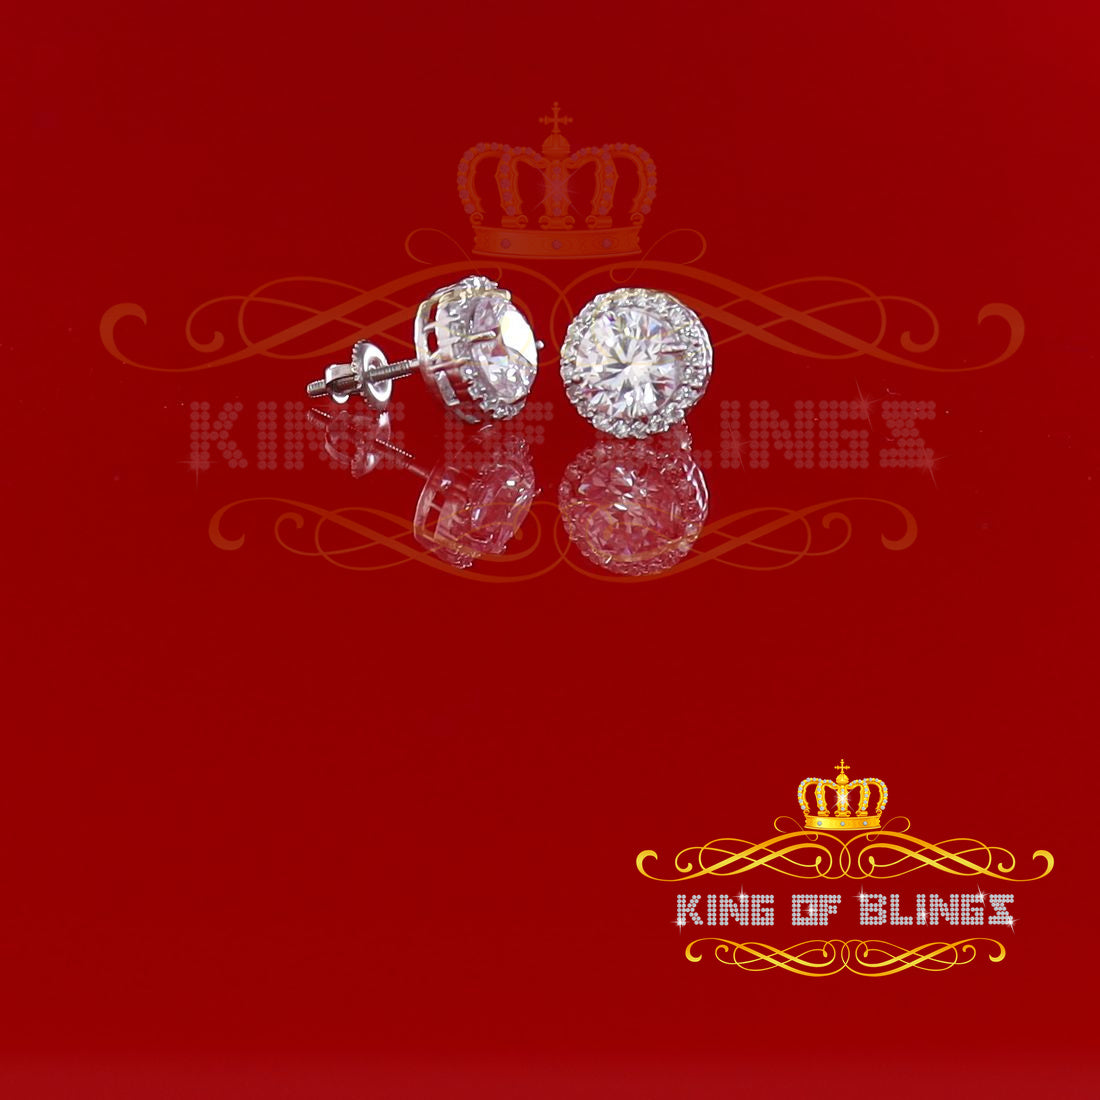 King of Blings- 925 White Silver 4.42ct Cubic Zirconia Women's & Men's Hip Hop Round Earrings KING OF BLINGS